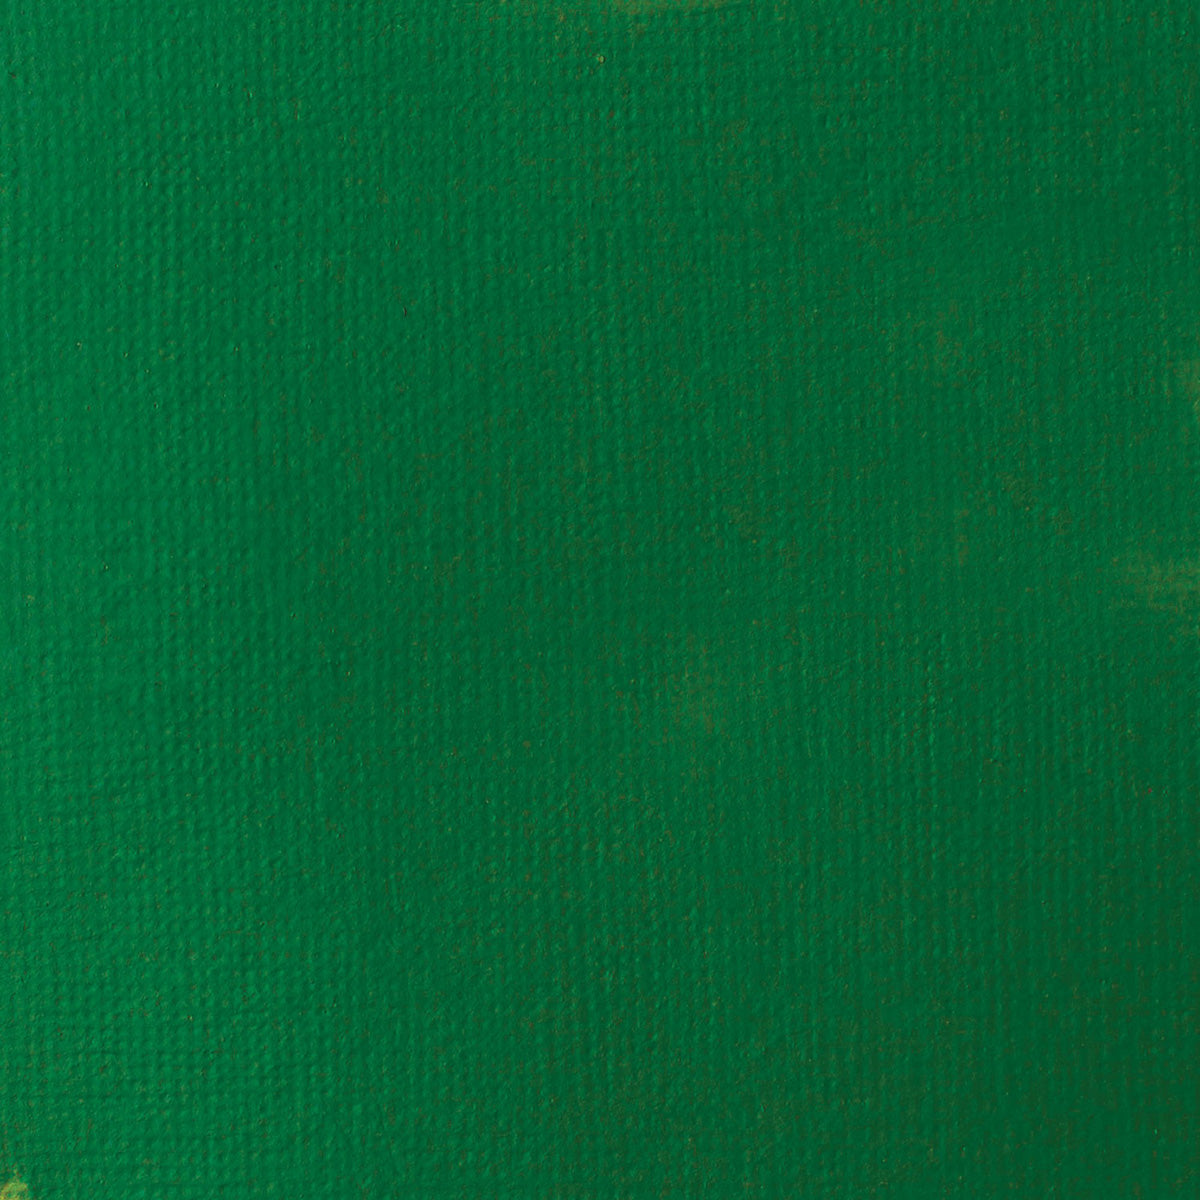 Liqitex Basics Fluid Acryl 118ml - Hookers Green Hue Permanent S1